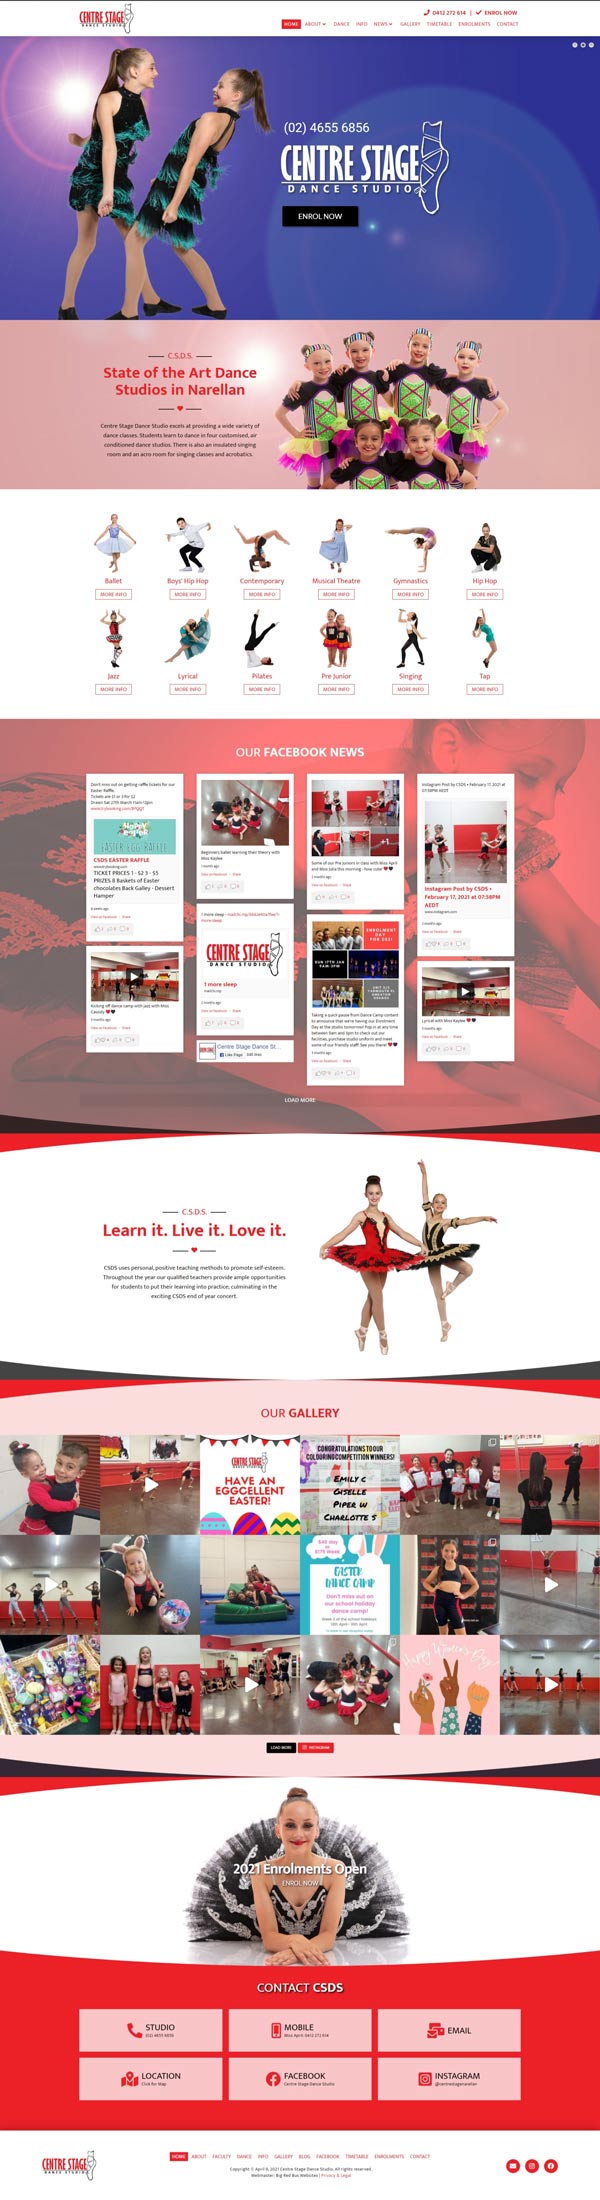 Centre Stage Dance Studio website designed by Big Red Bus Websites - ezample 1